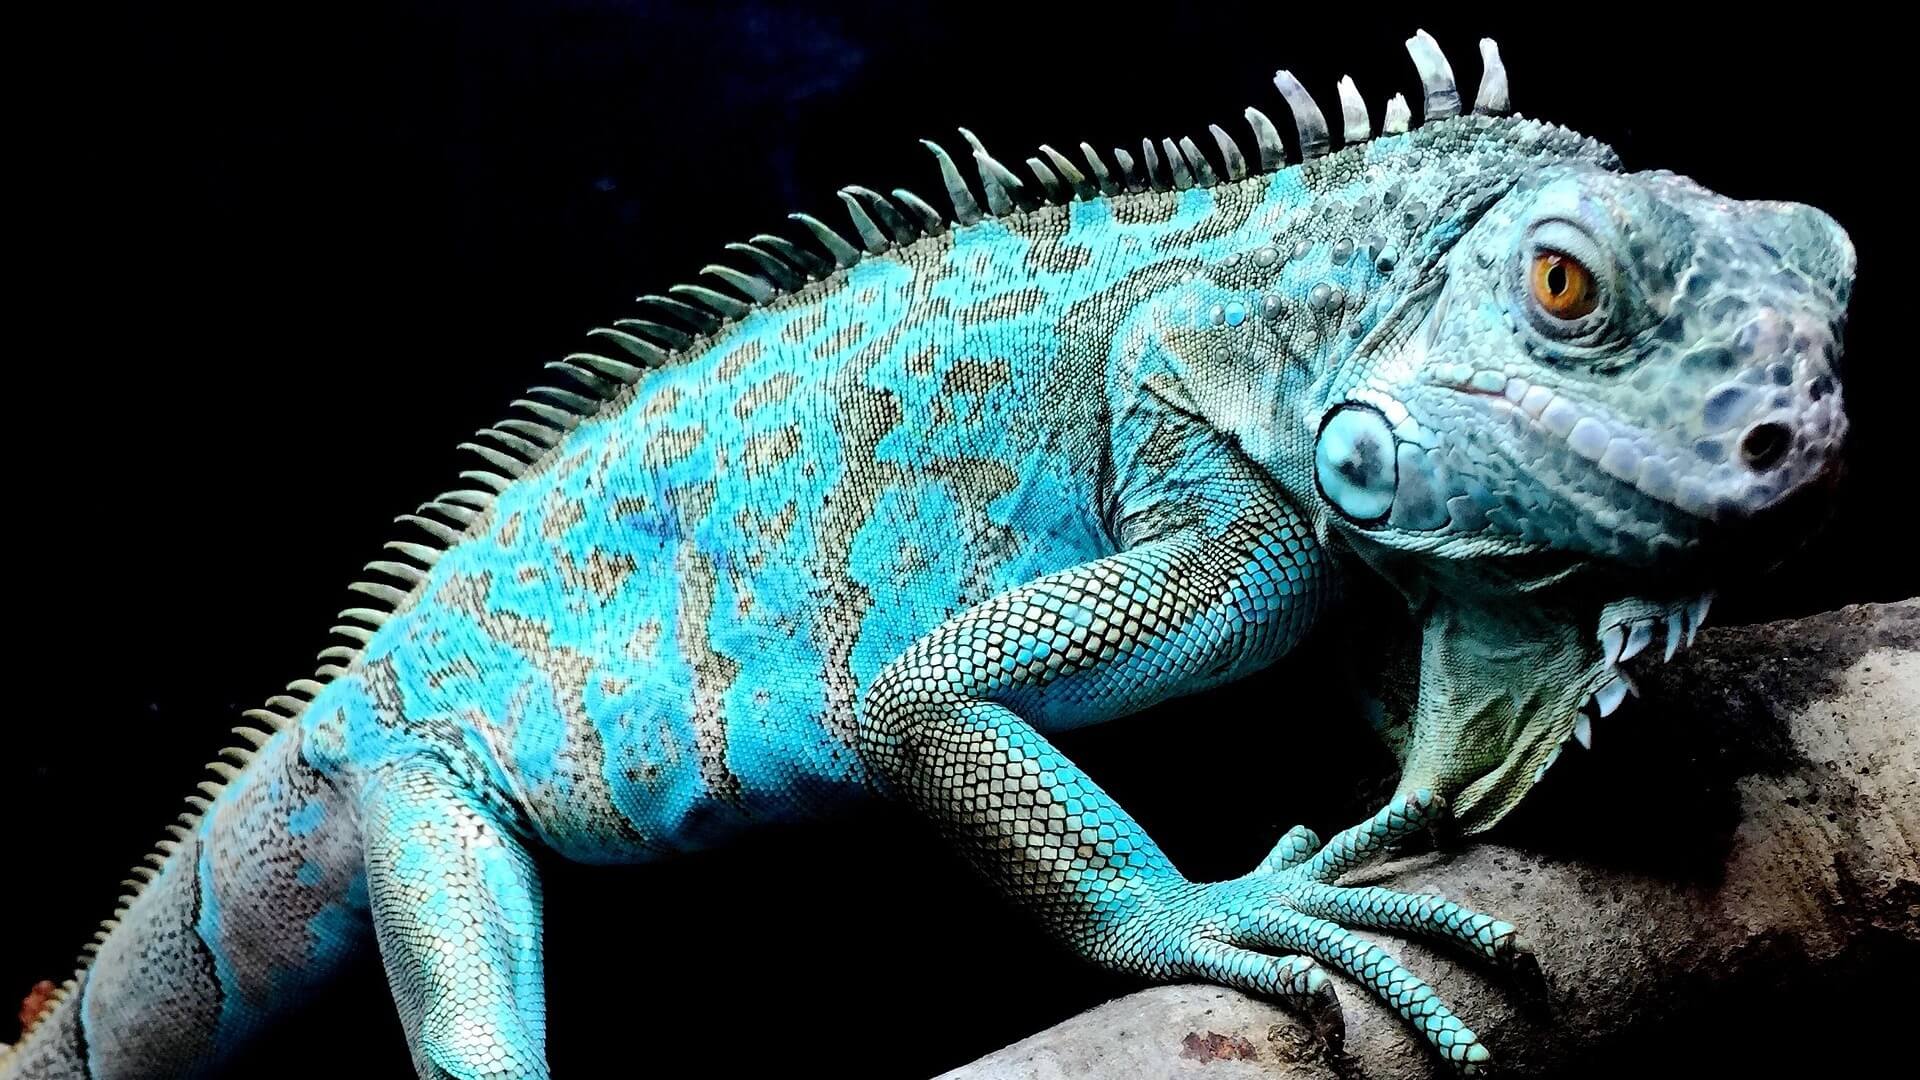 A blue iguana is sitting on a branch.